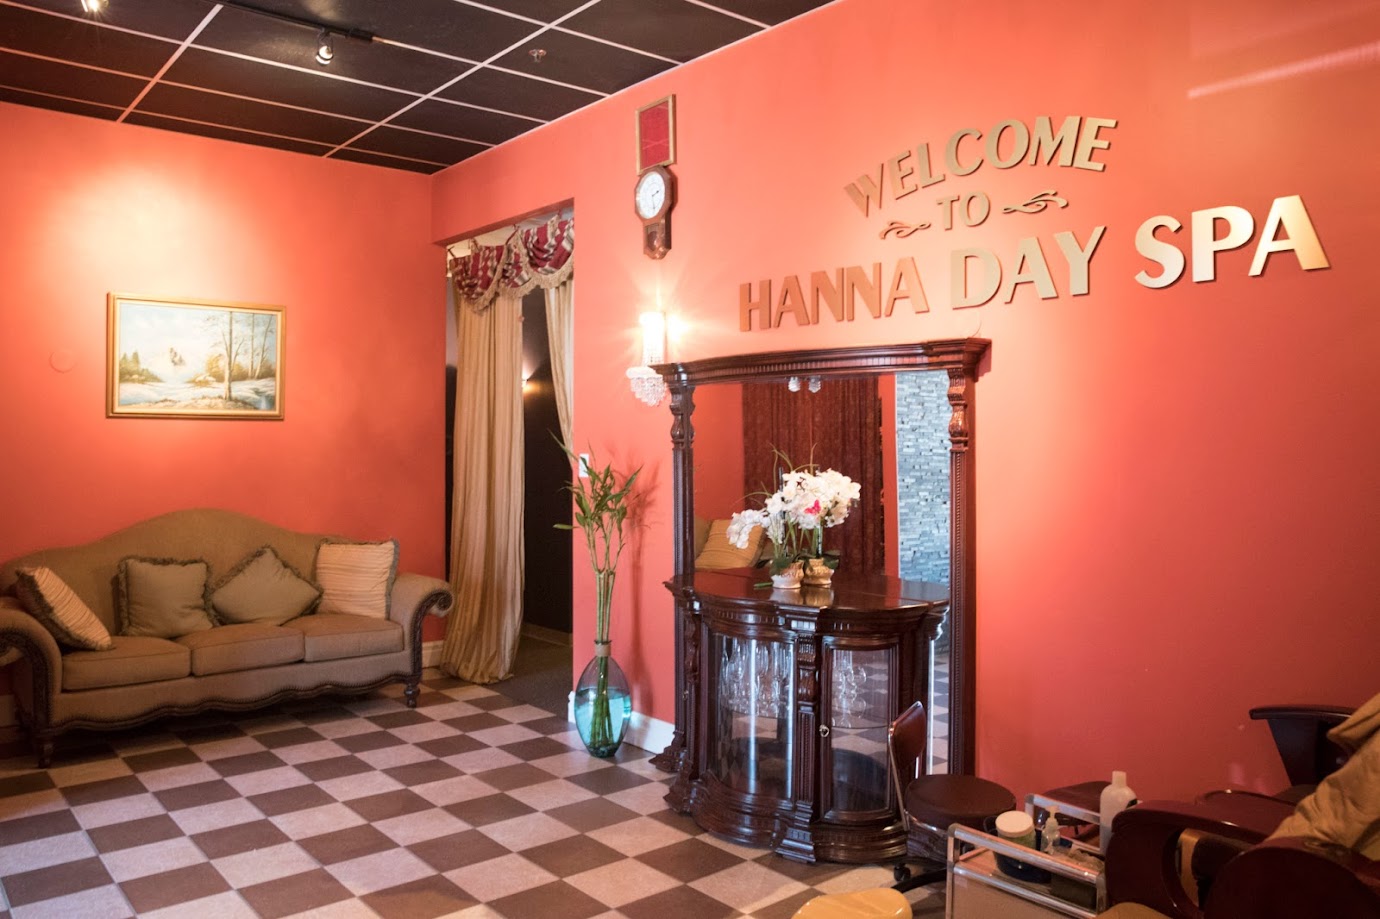 Hanna Day Spa and Massage